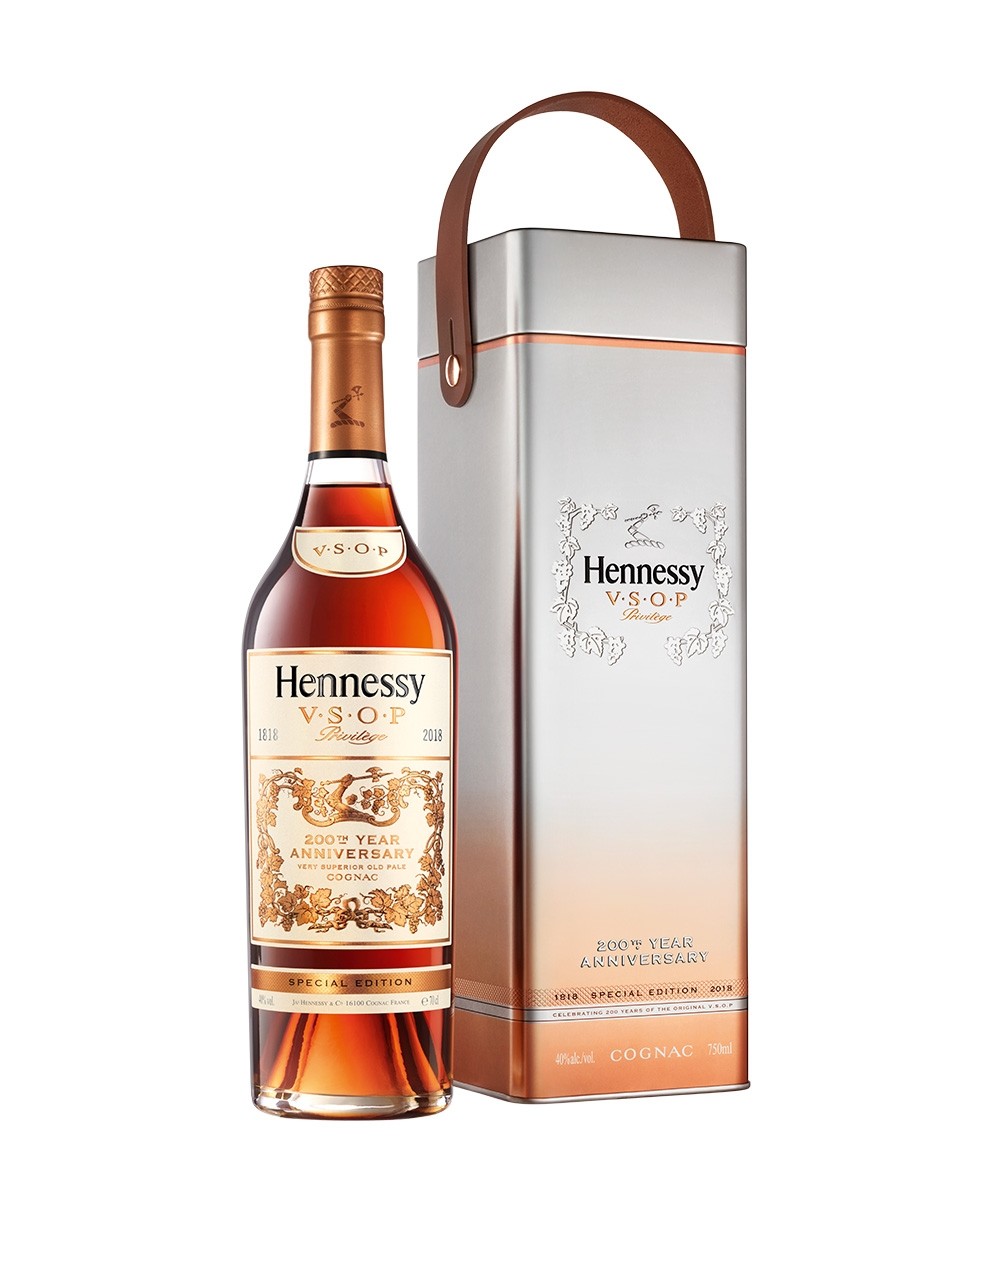 Hennessy V.S.O.P Privilège - 200th Year Anniversary | Buy